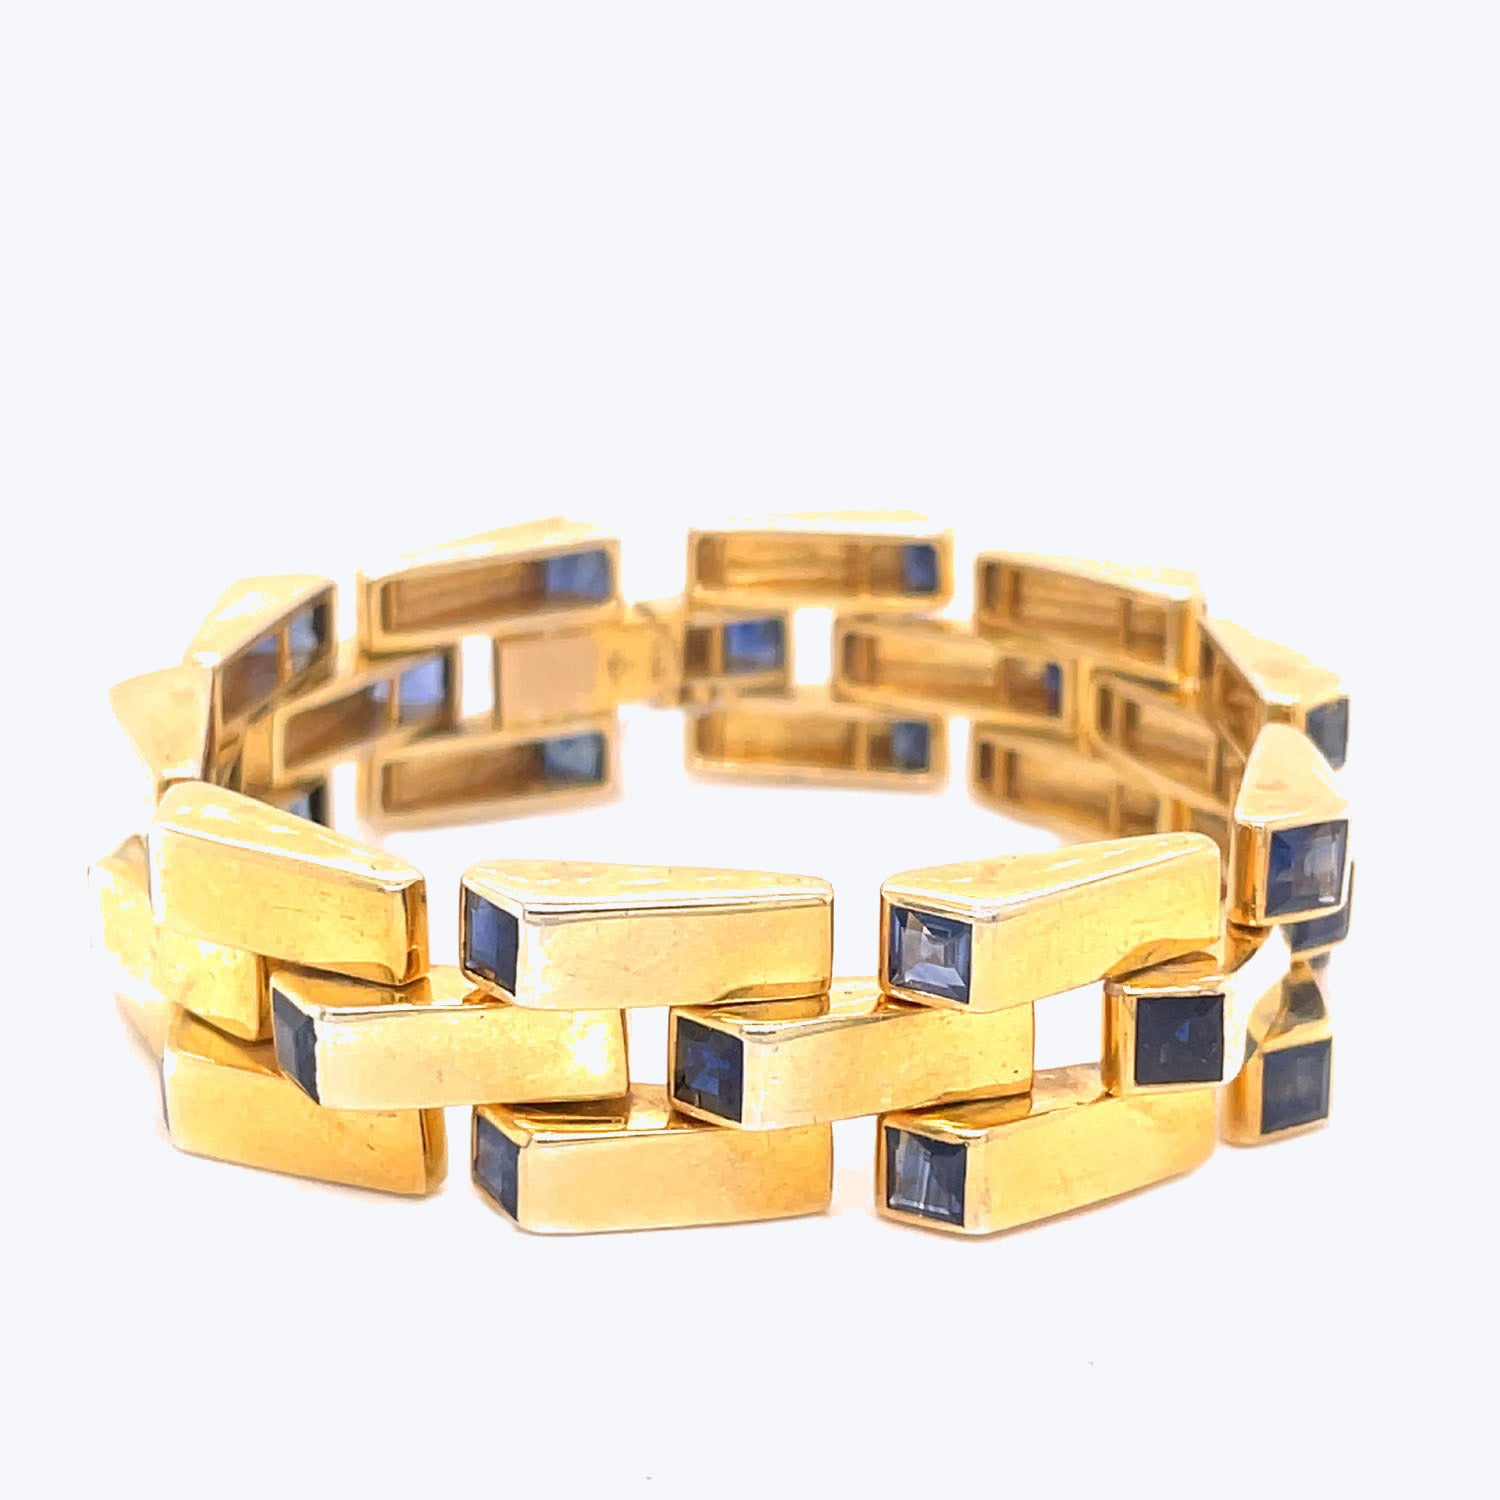 Elegant gold bracelet with geometric design and blue gemstone accents.